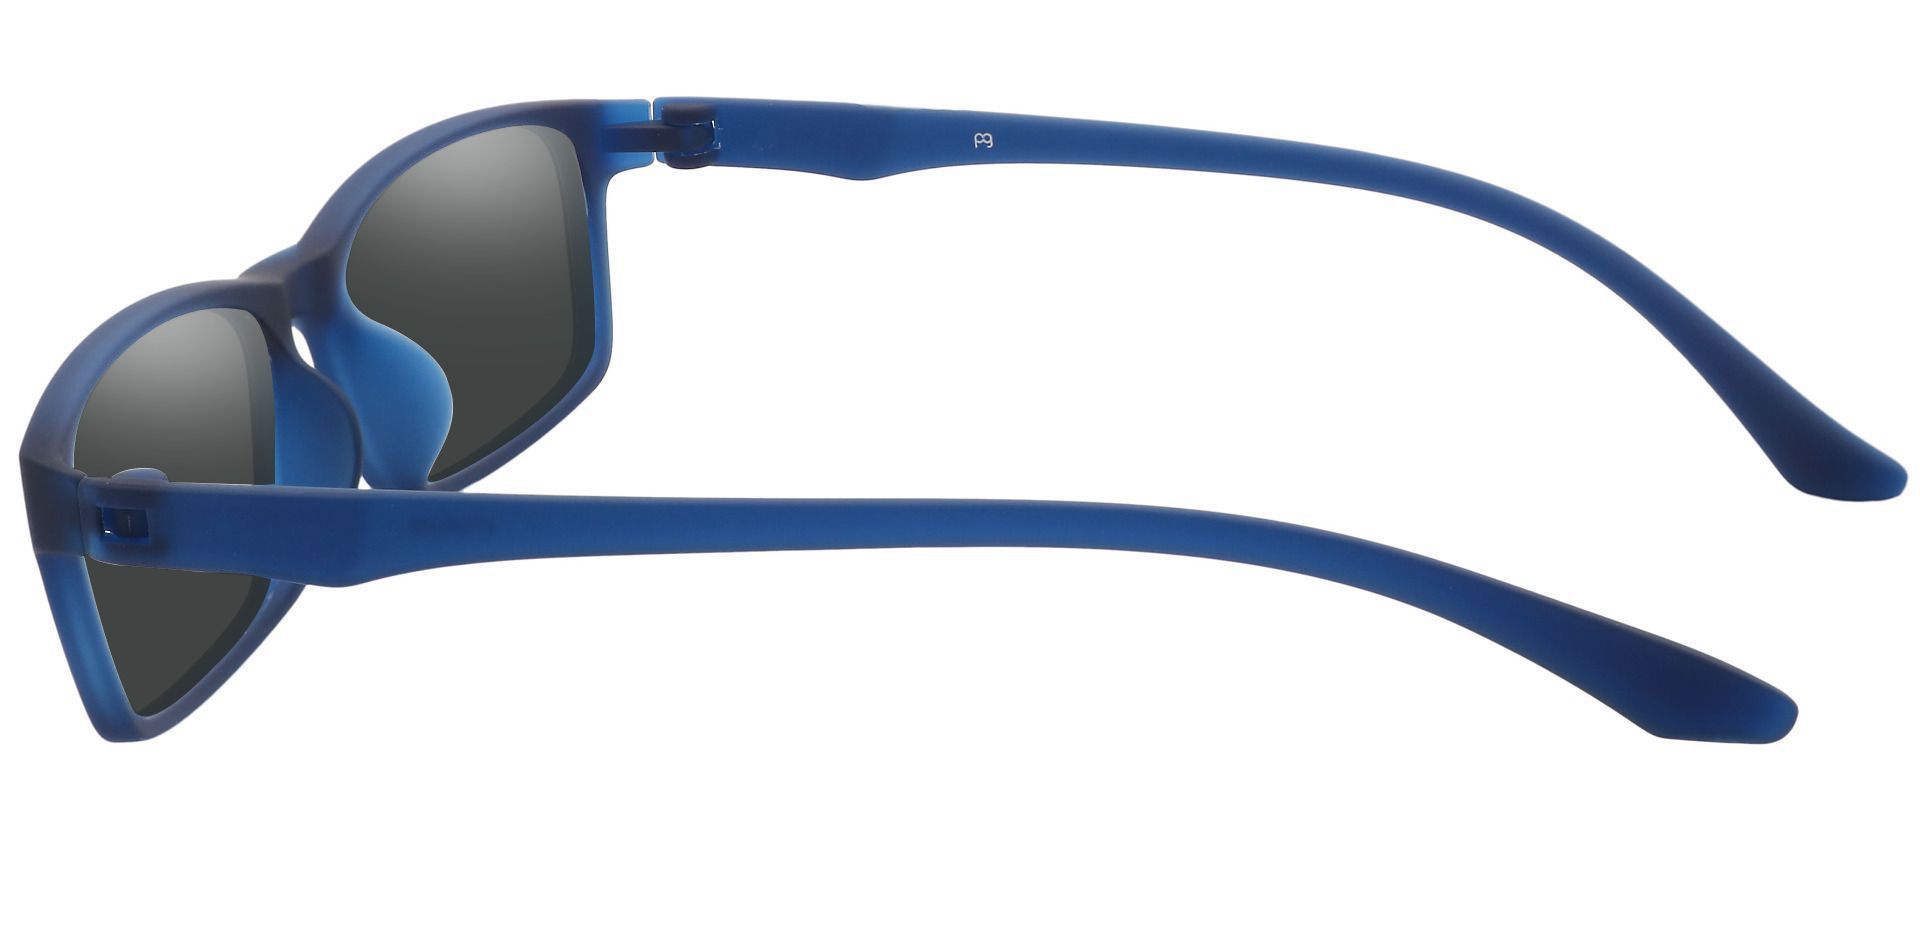 Poplar Rectangle Prescription Sunglasses - Blue Frame With Gray Lenses